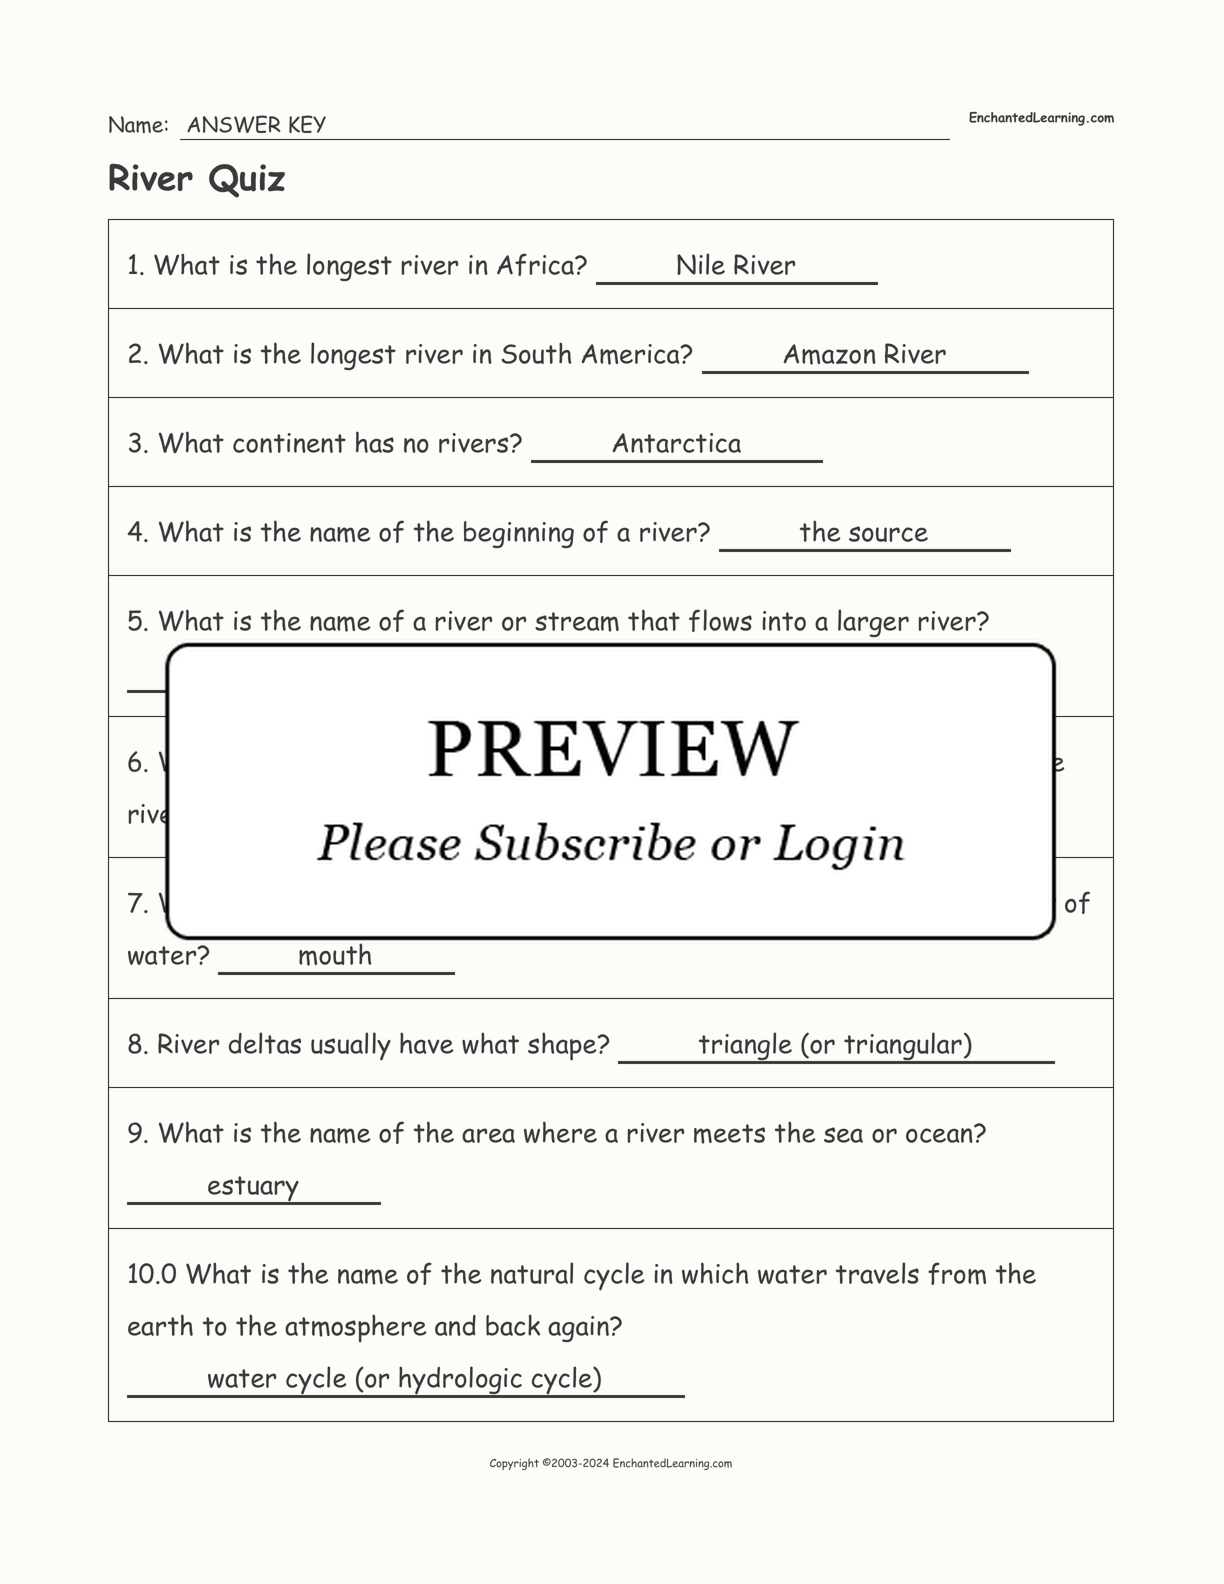 River Quiz interactive worksheet page 2